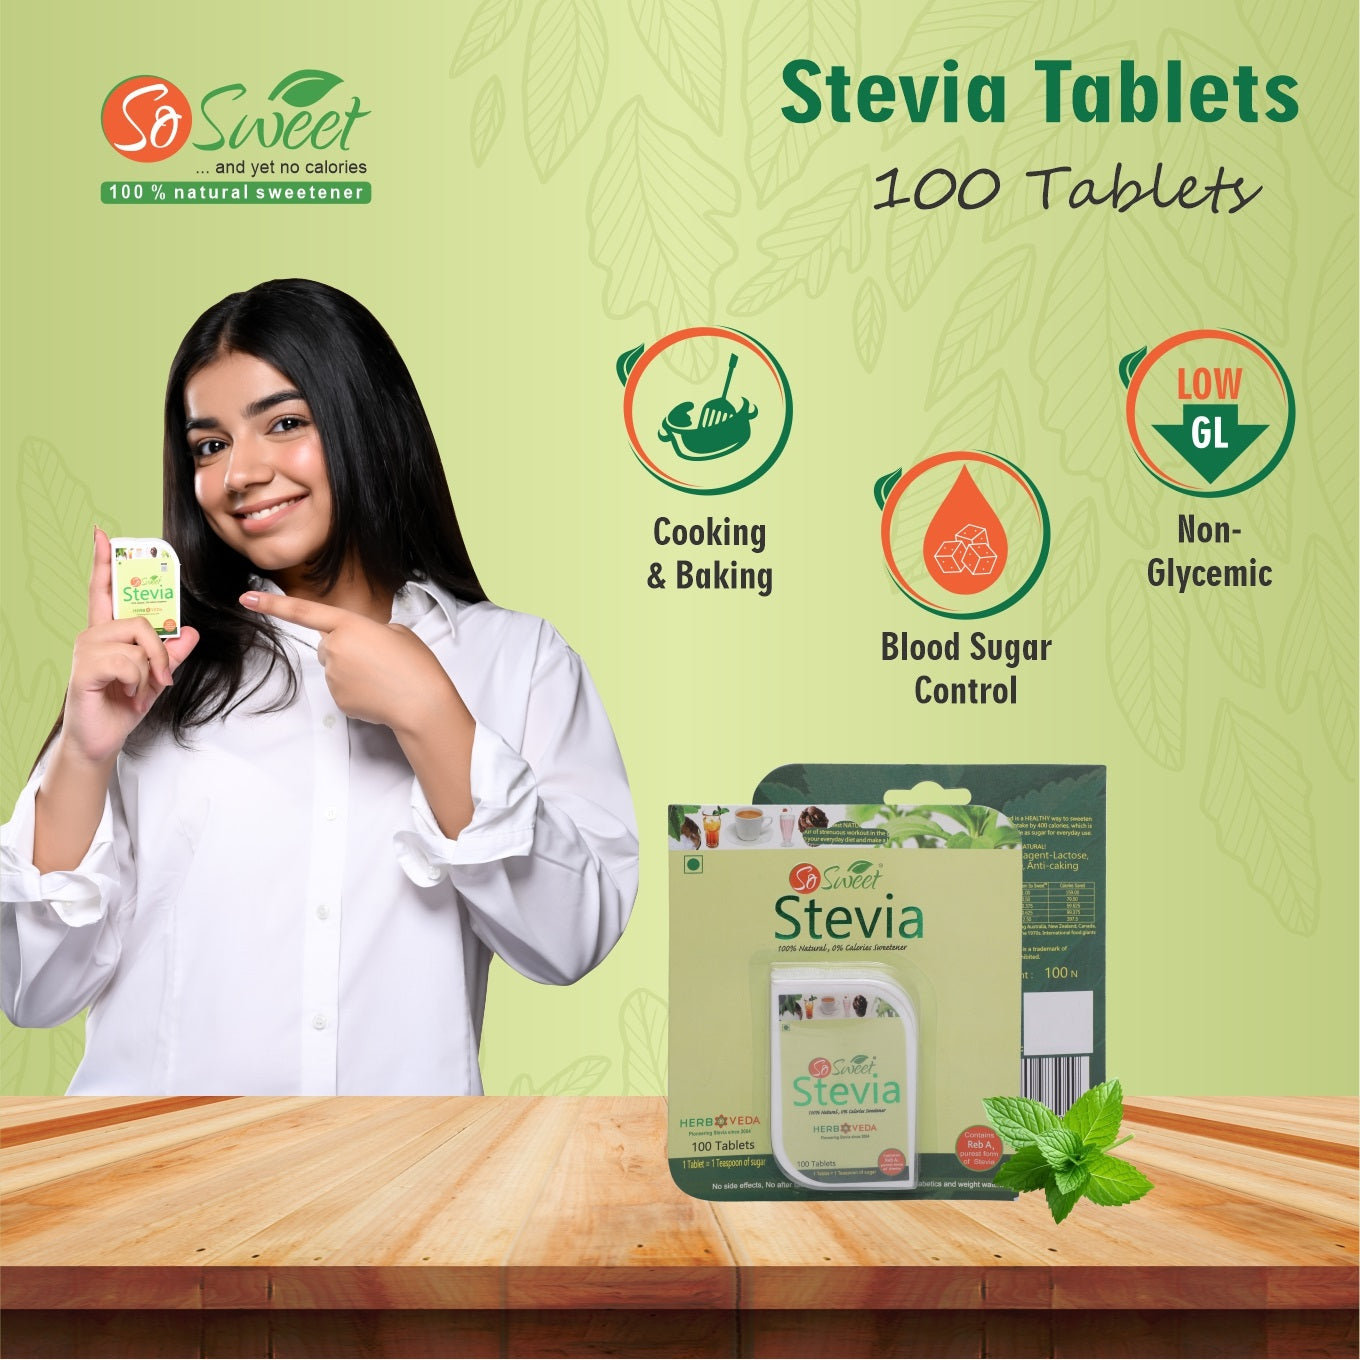 So Sweet Stevia Tablet  100 Sugar Free Natural Zero Calorie Sweeneter